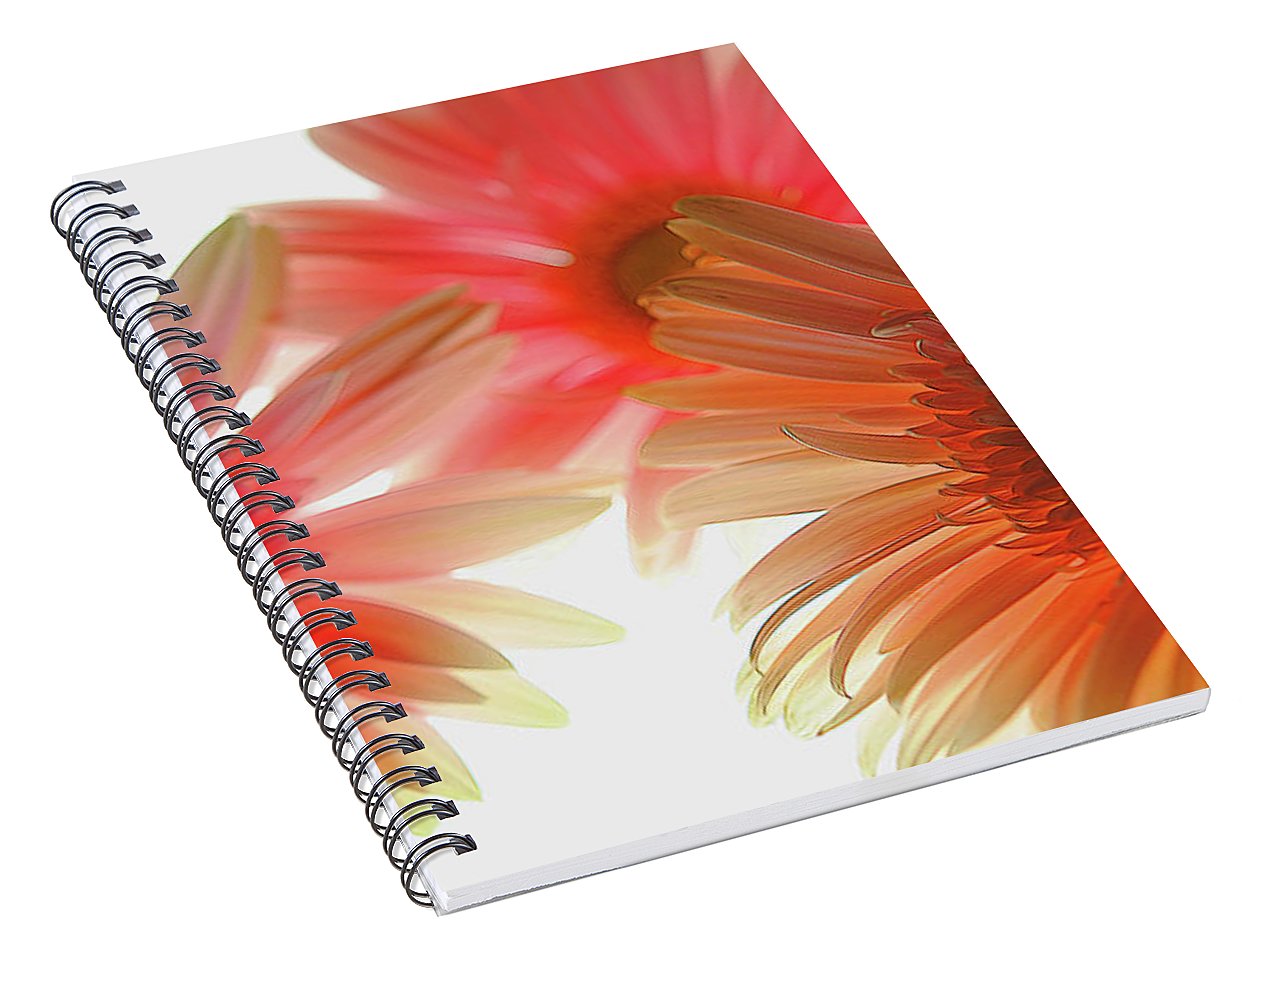 Flowers 2602 - Spiral Notebook